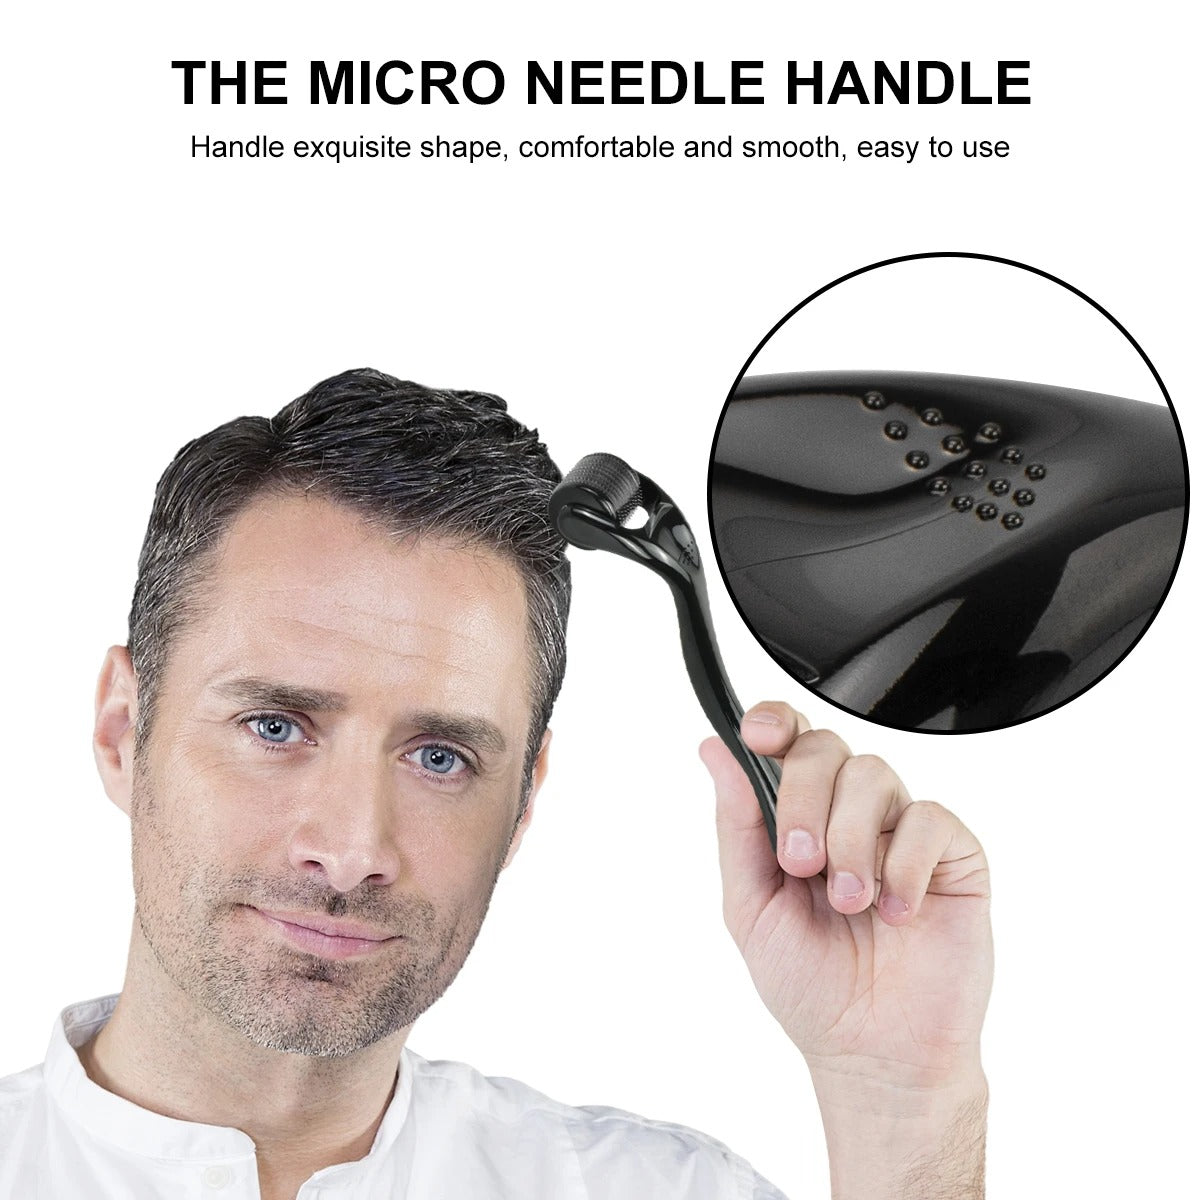 Micro Needle Derma Roller